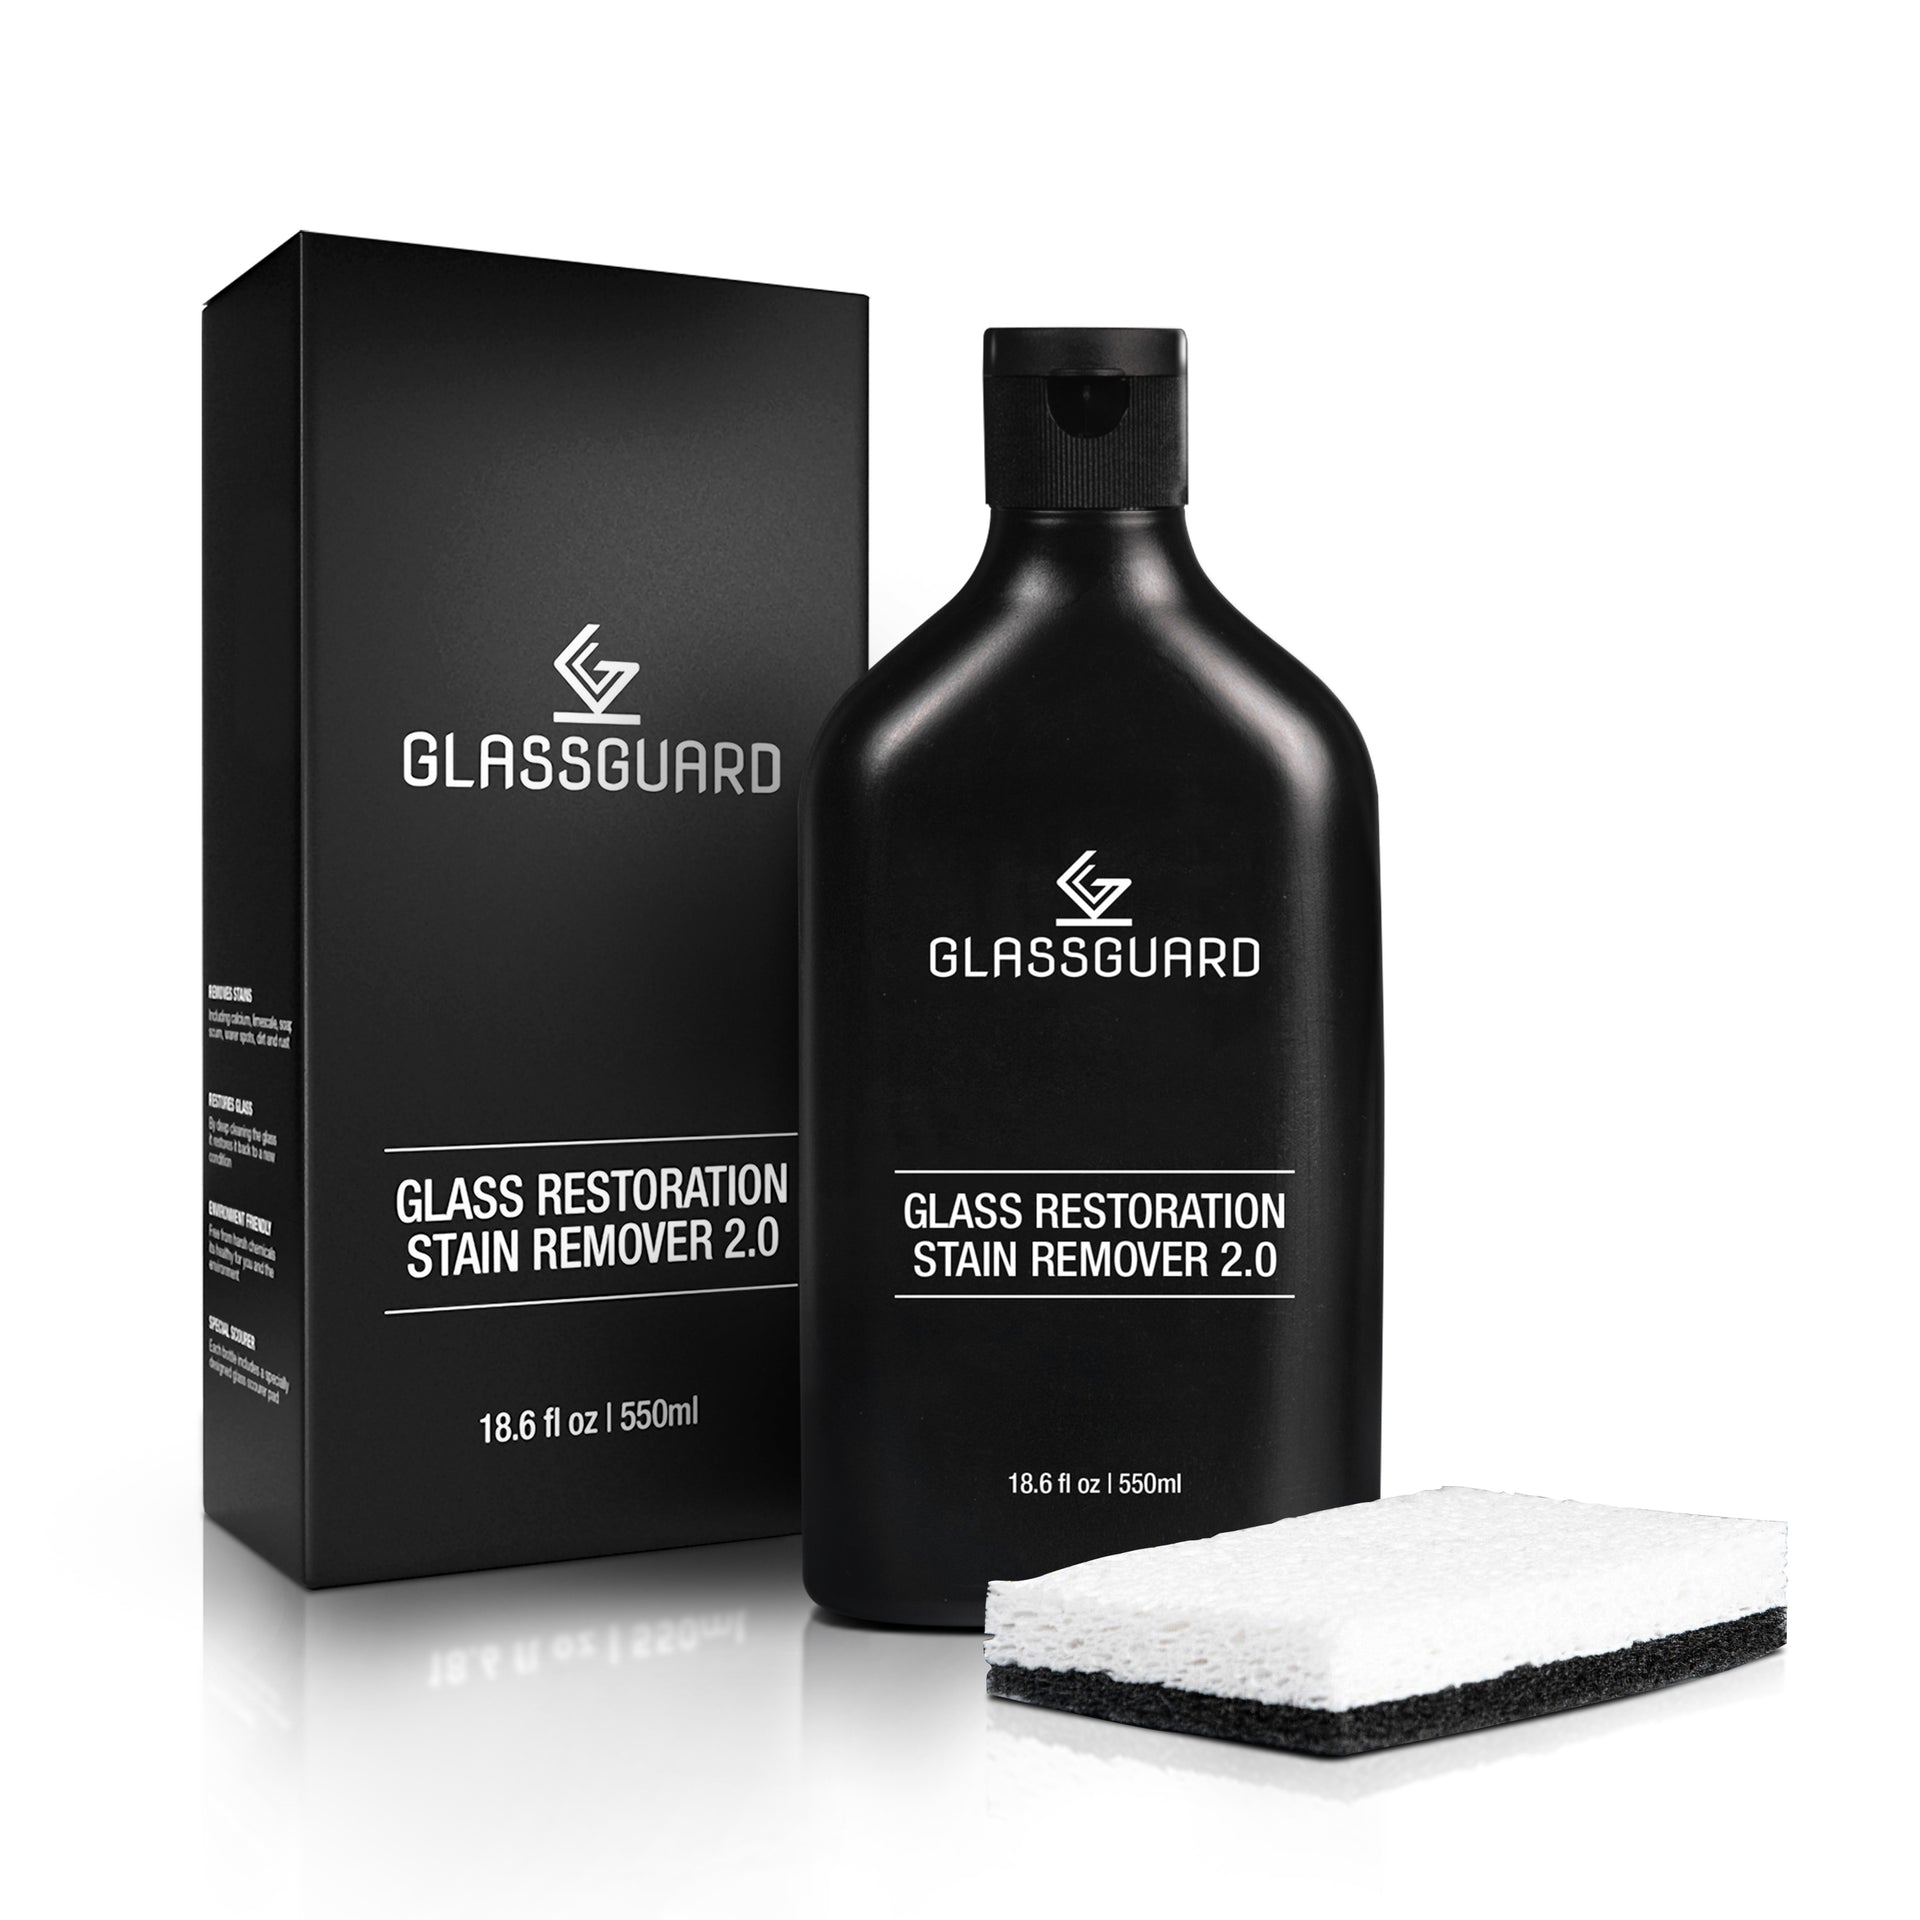 GLASSGUARD™ Glass Restoration Stain Remover 2.0